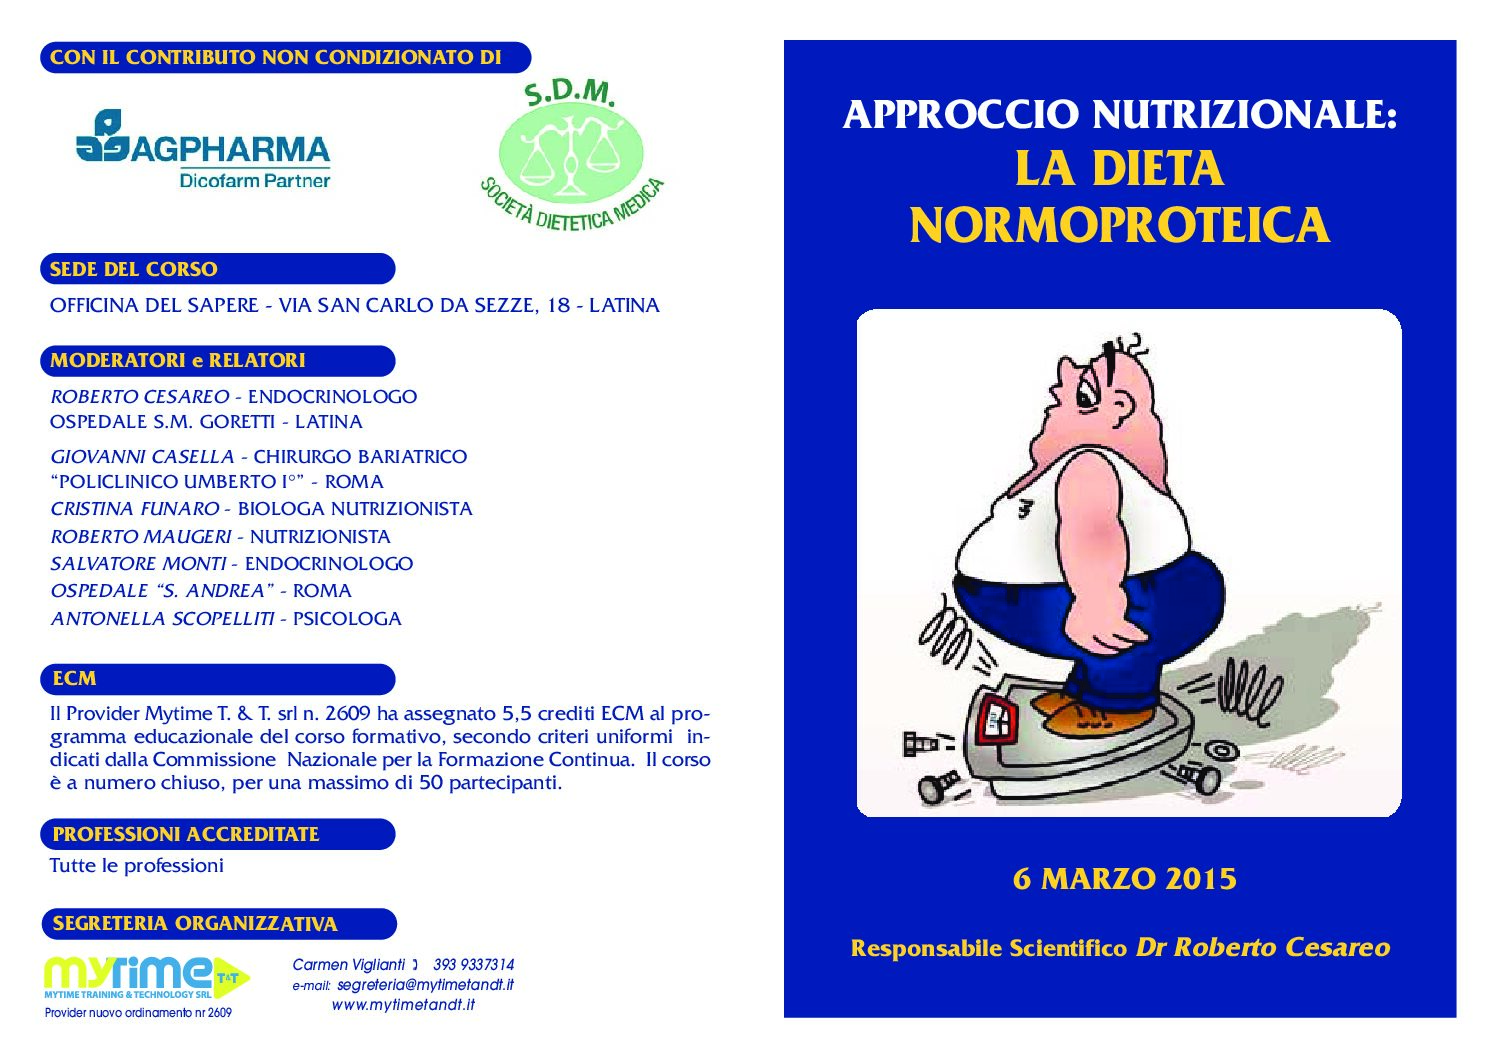 06 Marzo 2015 - Approccio Nutrizionale "La Dieta Normoproteica"